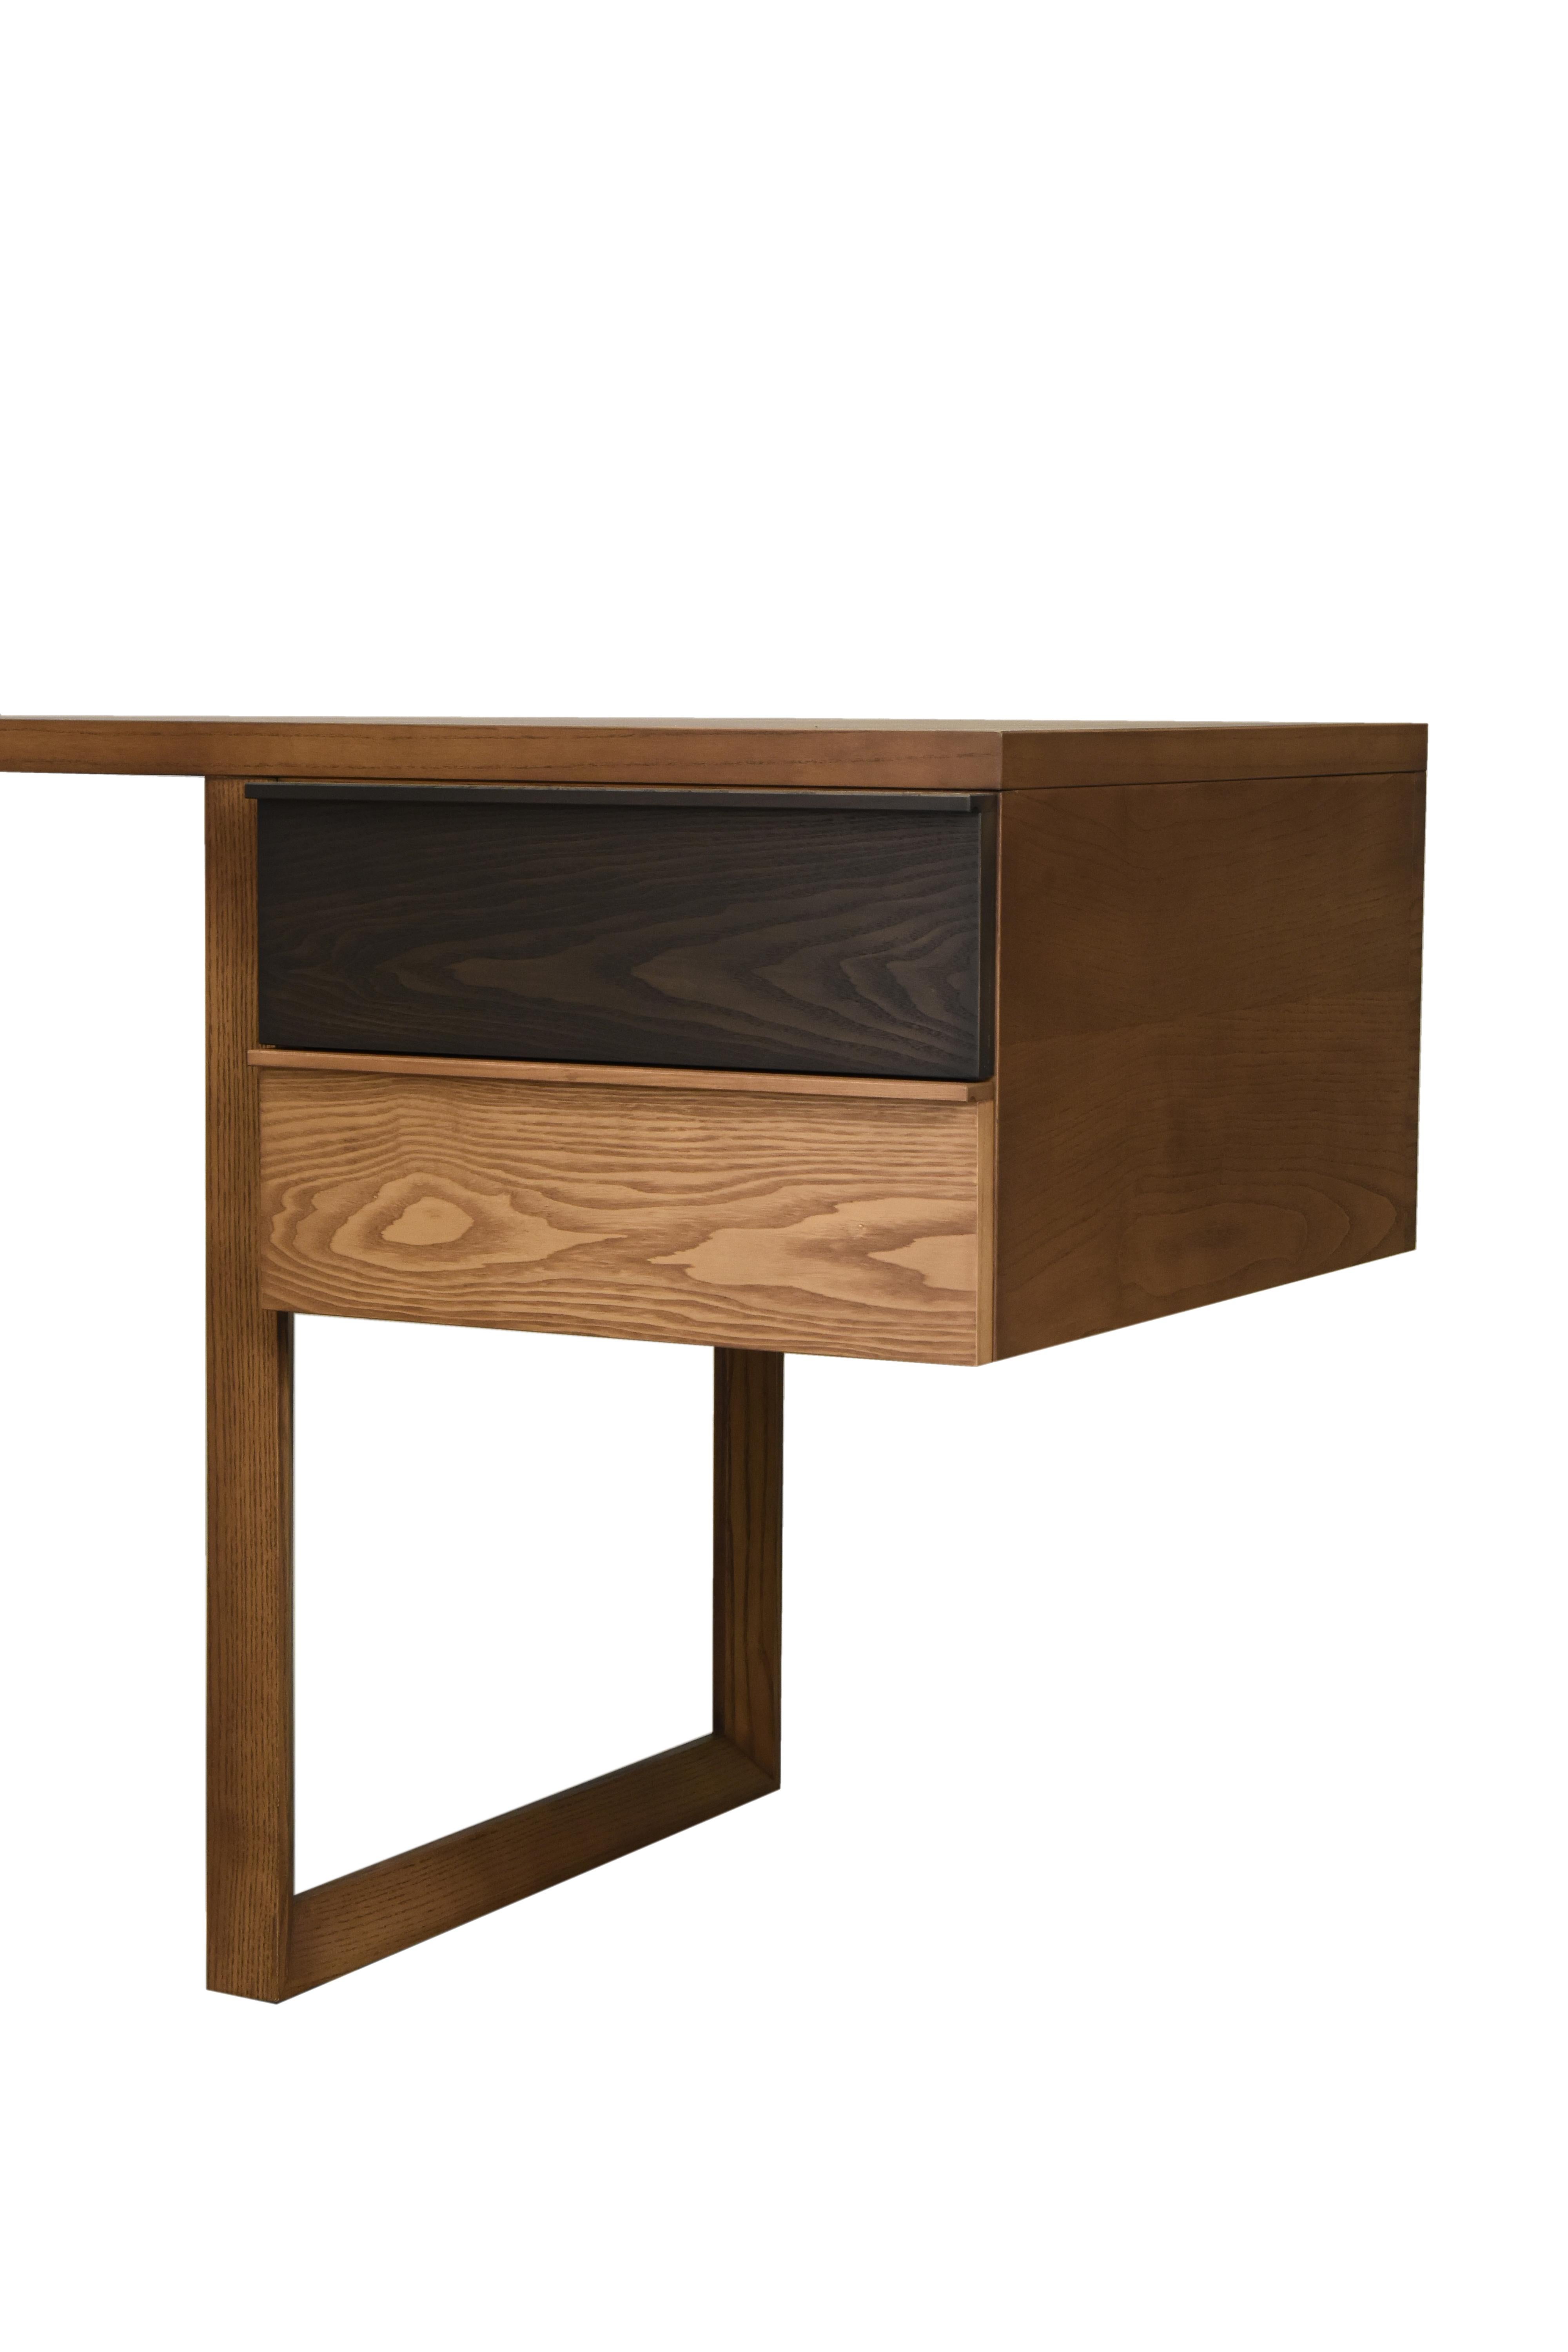 Swing by Morelato, Desk Made of Ashwood, Design Libero Rutilo 2